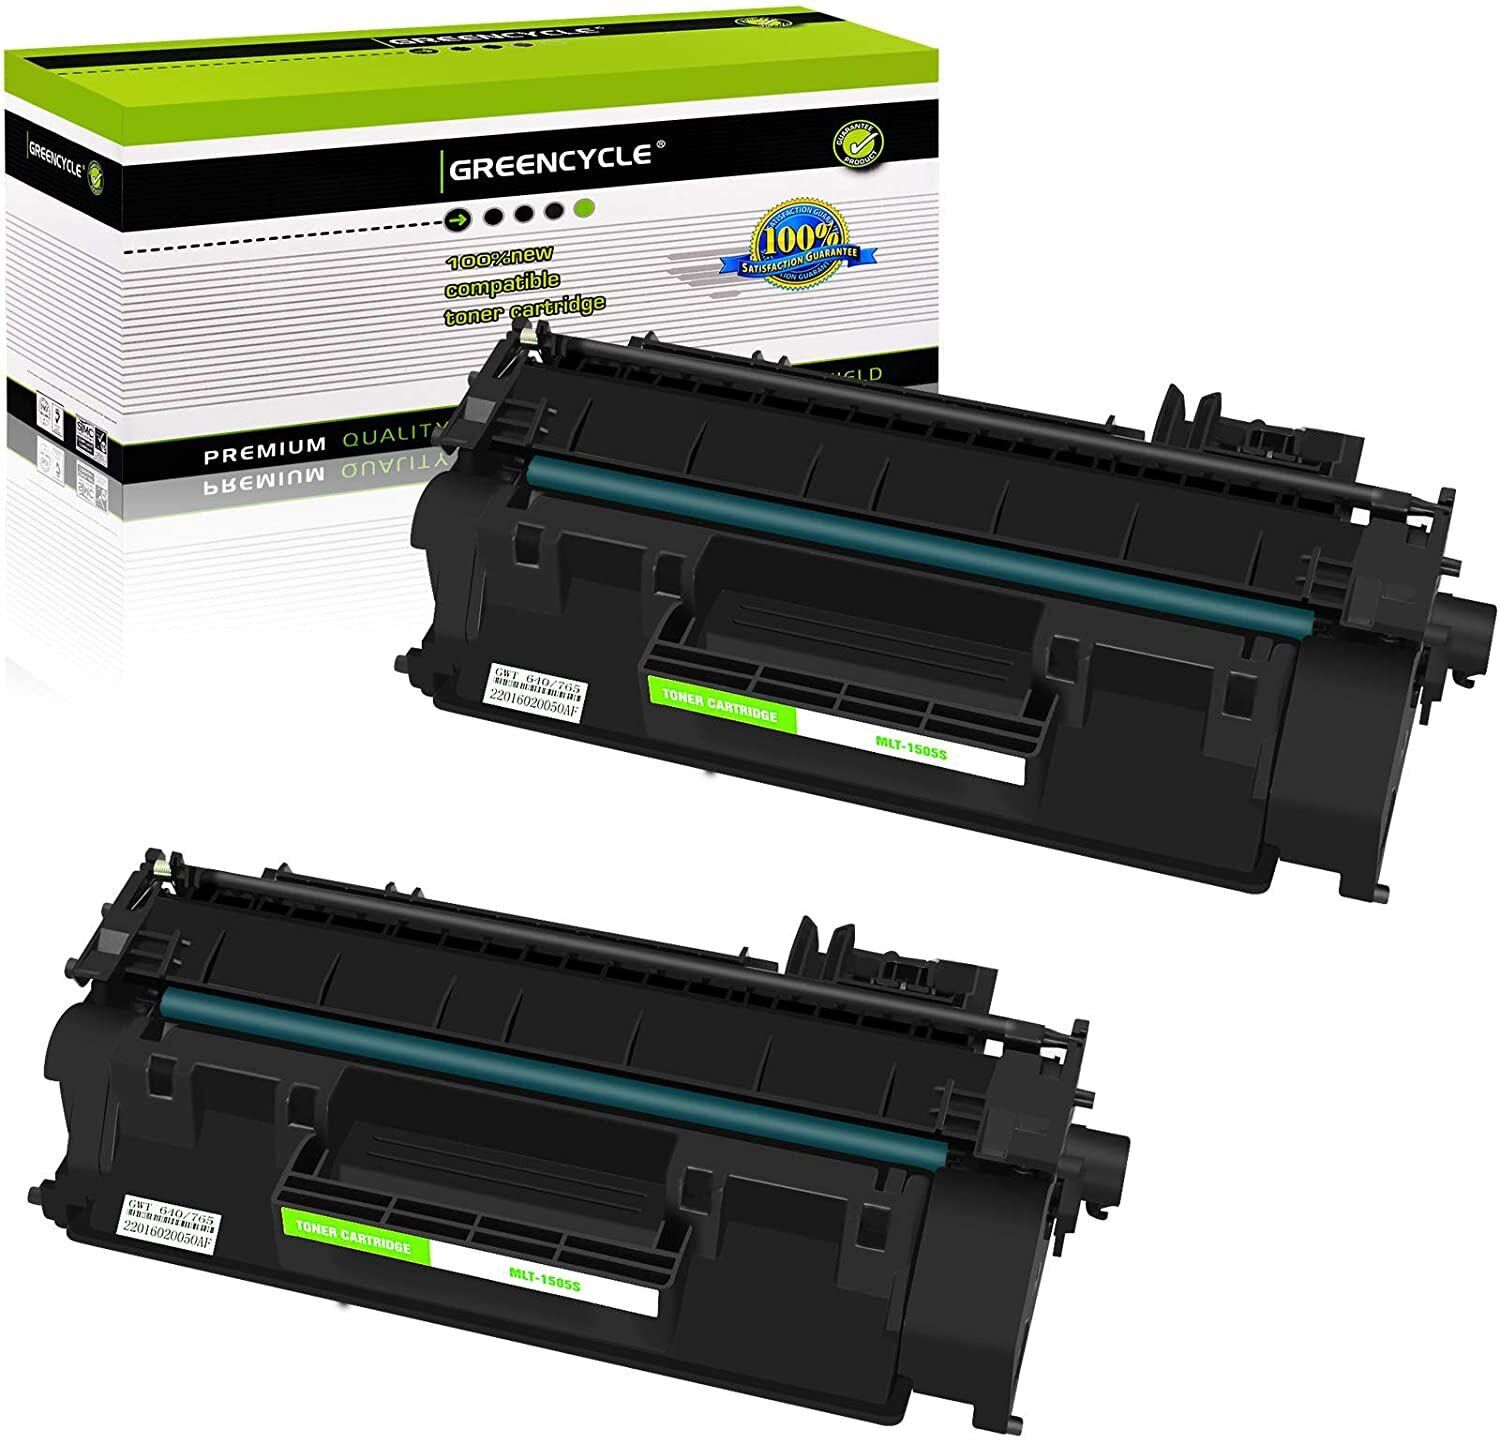 2PK CF280A 80A Laser Toner Cartridge Fits for HP LaserJet Pro 400 M401dw M401dne